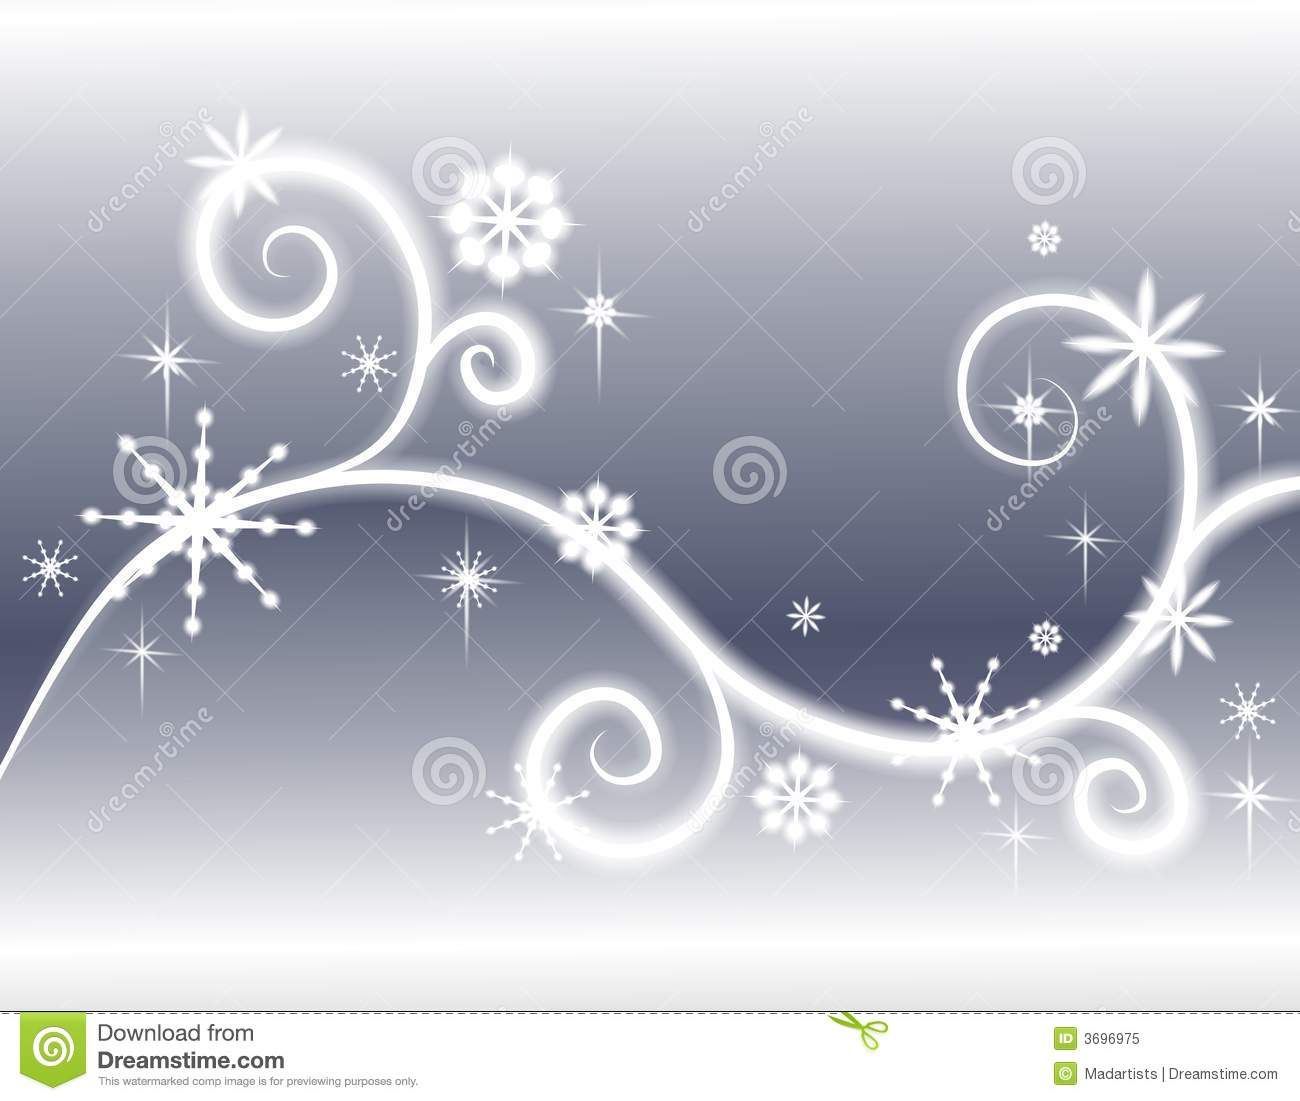 Clipart snowflake swirl. Free snowflakes google search